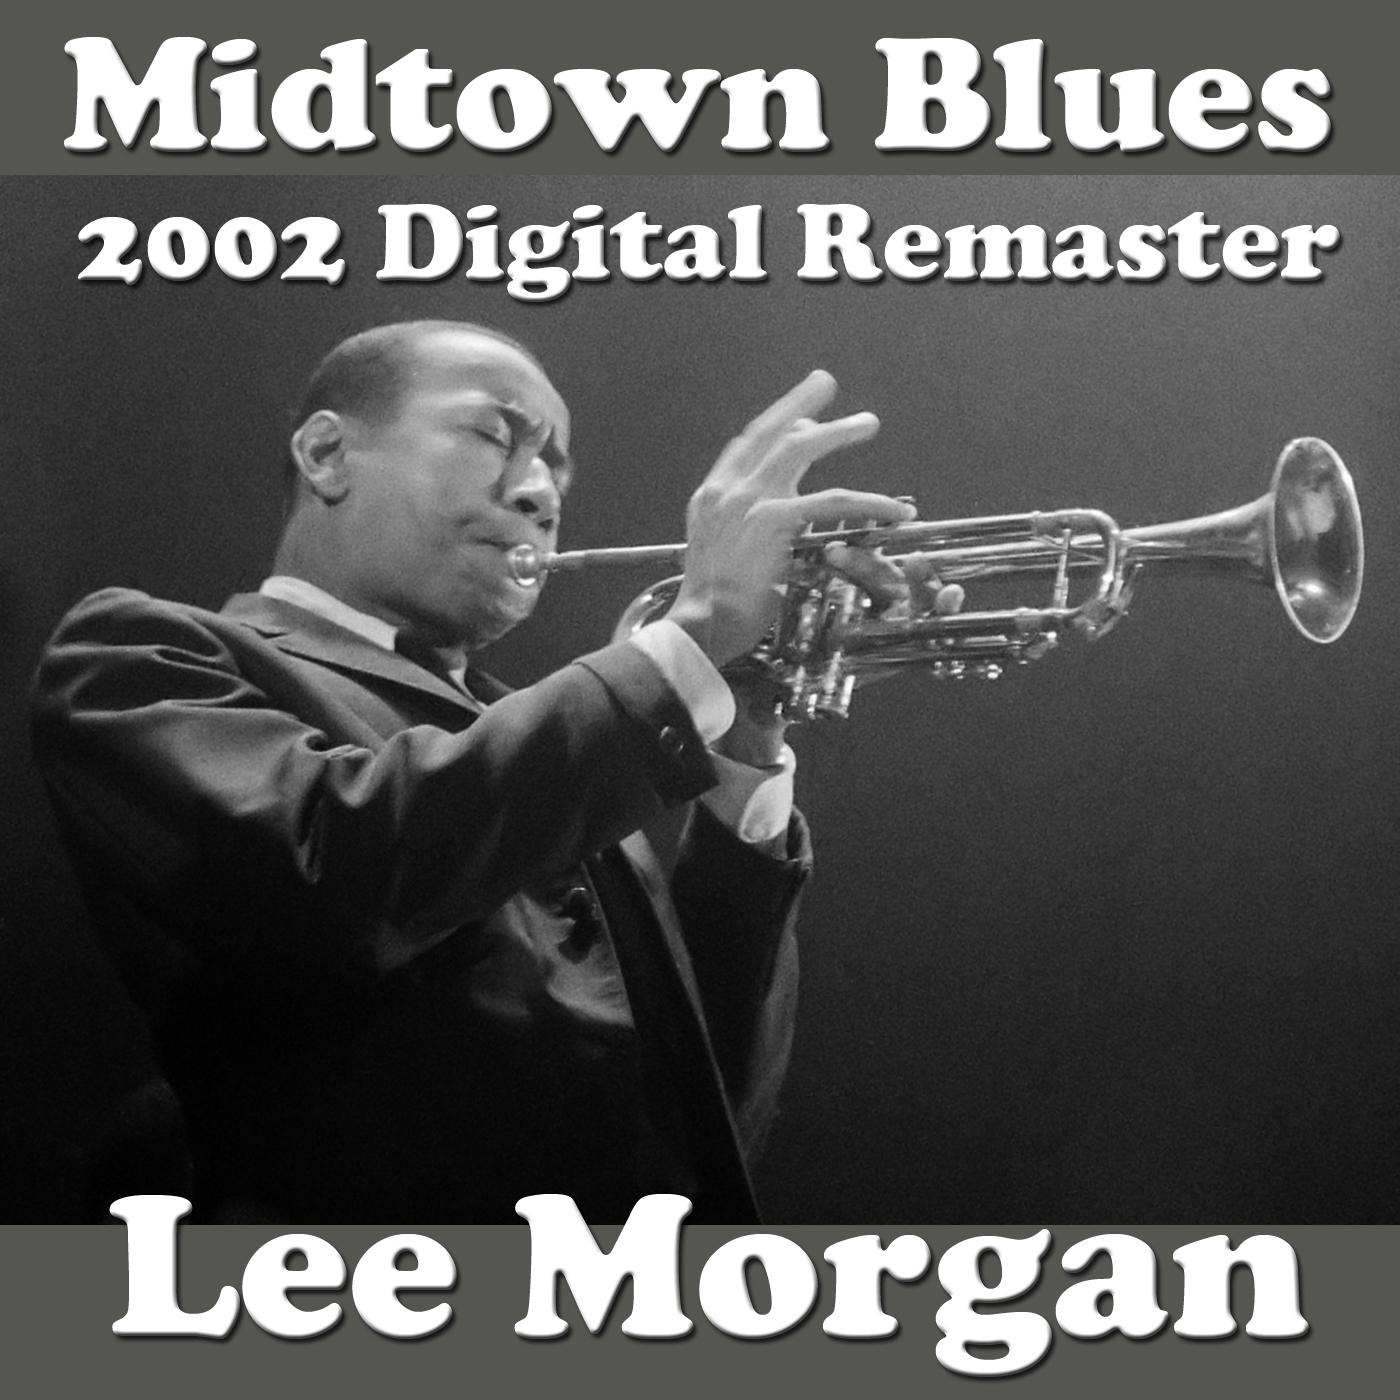 Midtown Blues (2002 Digital Remaster)